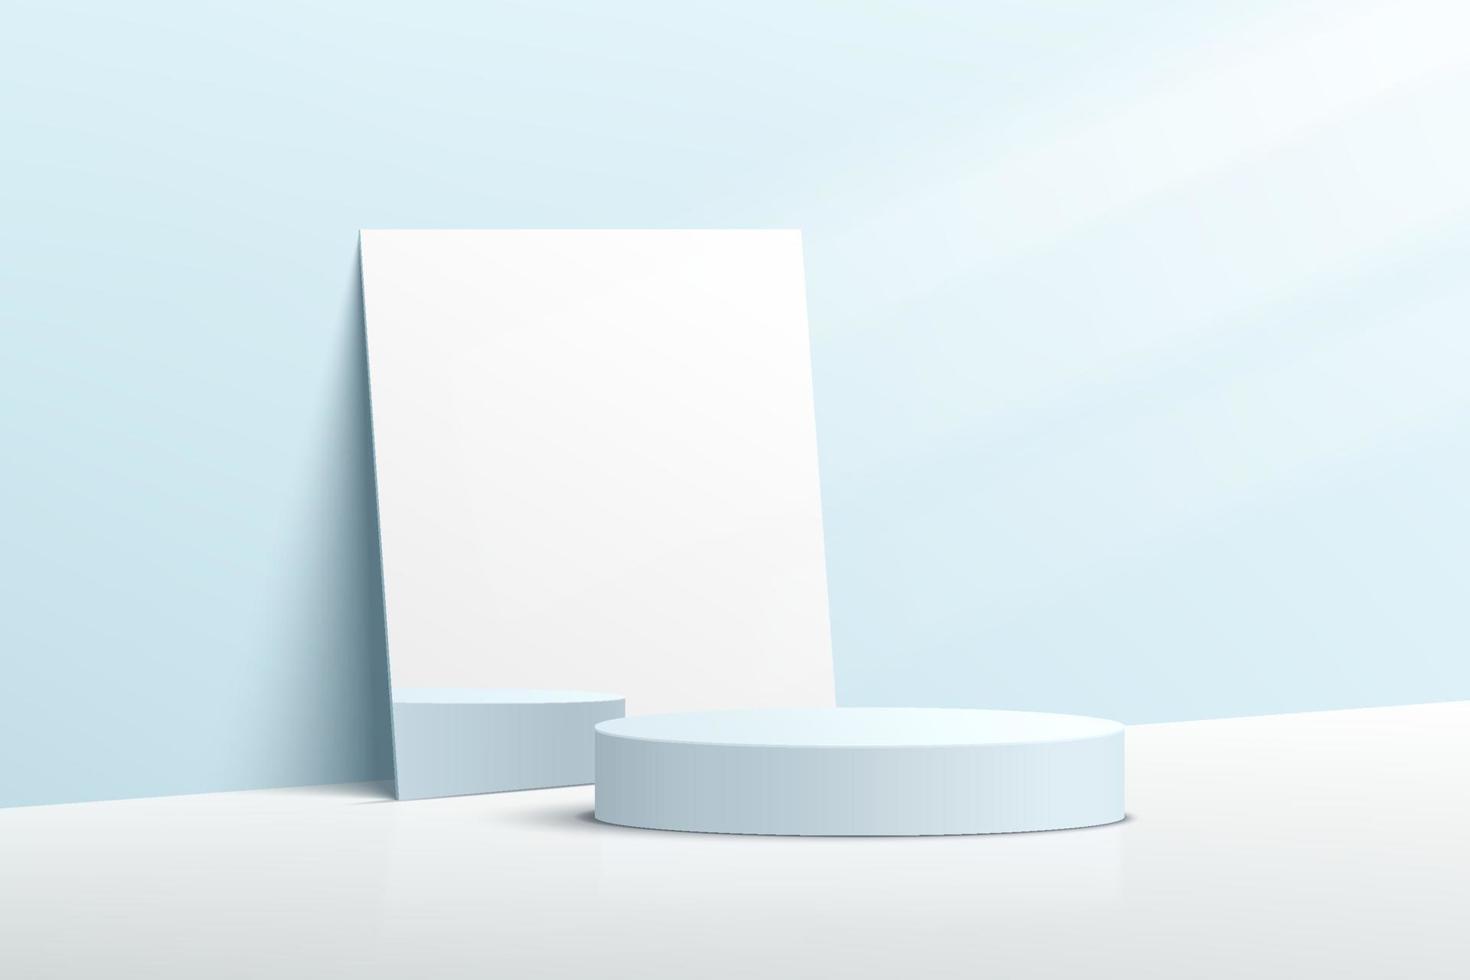 podio de pedestal cilíndrico 3d azul claro abstracto con espejos rectangulares e iluminación. escena de pared minimalista azul pastel para la presentación de productos cosméticos. plataforma de representación de geometría vectorial. vector